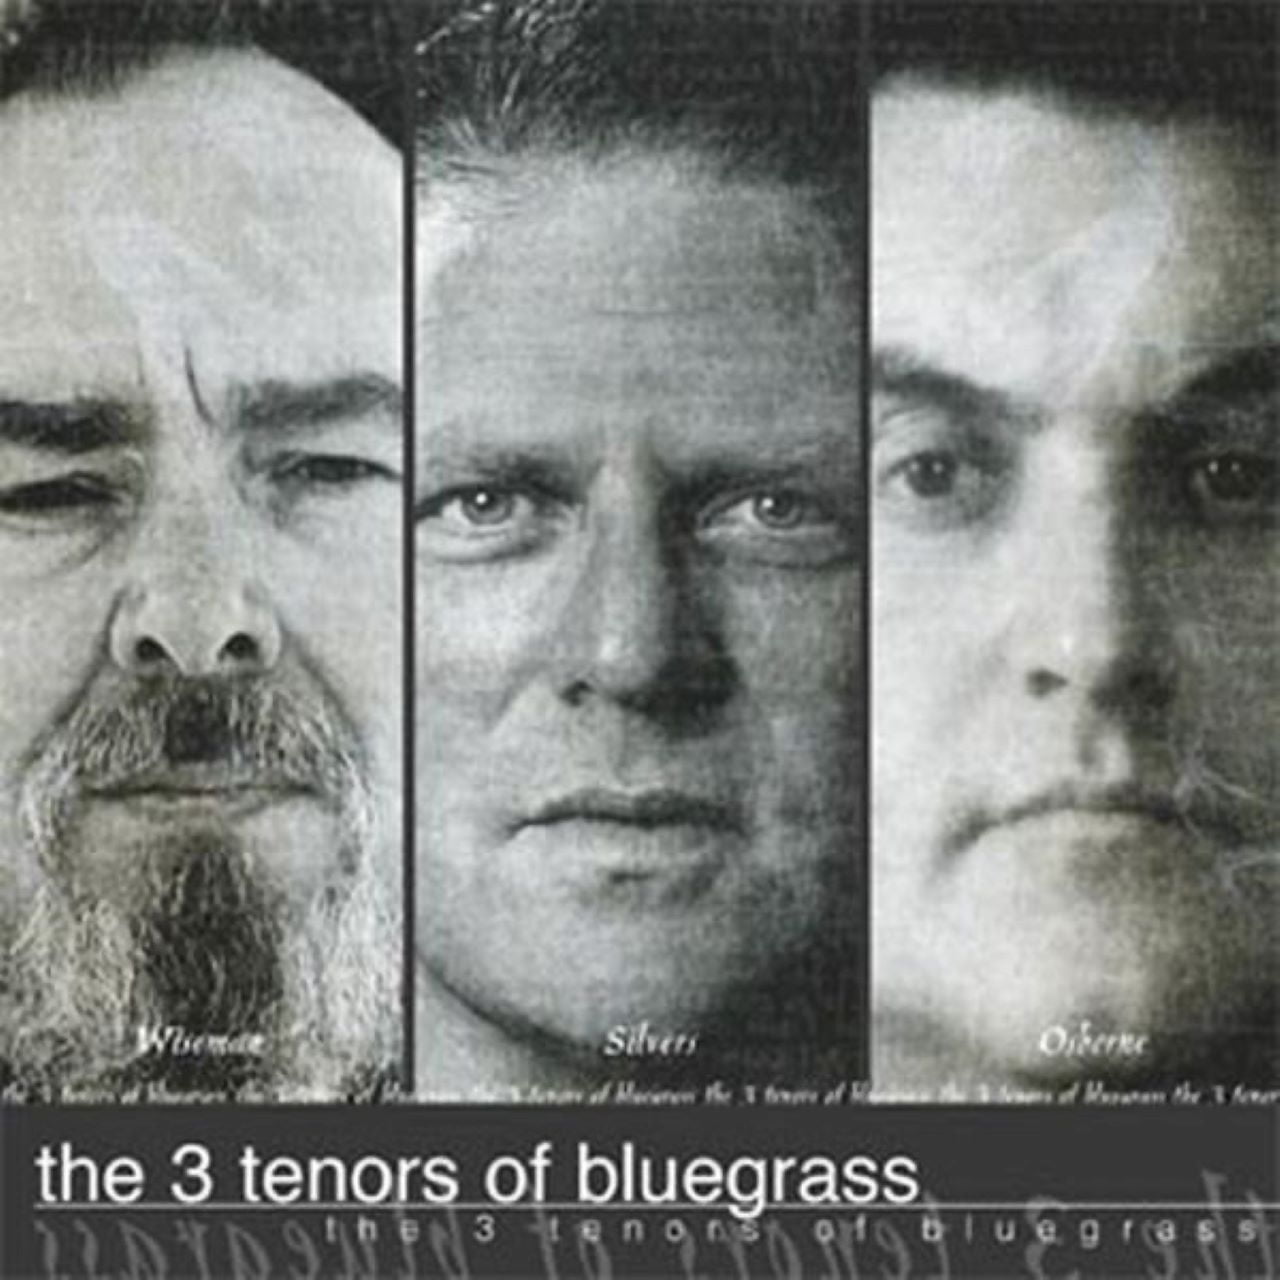 3 Tenors Of Bluegrass - The 3 Tenors Of Bluegrass cover album